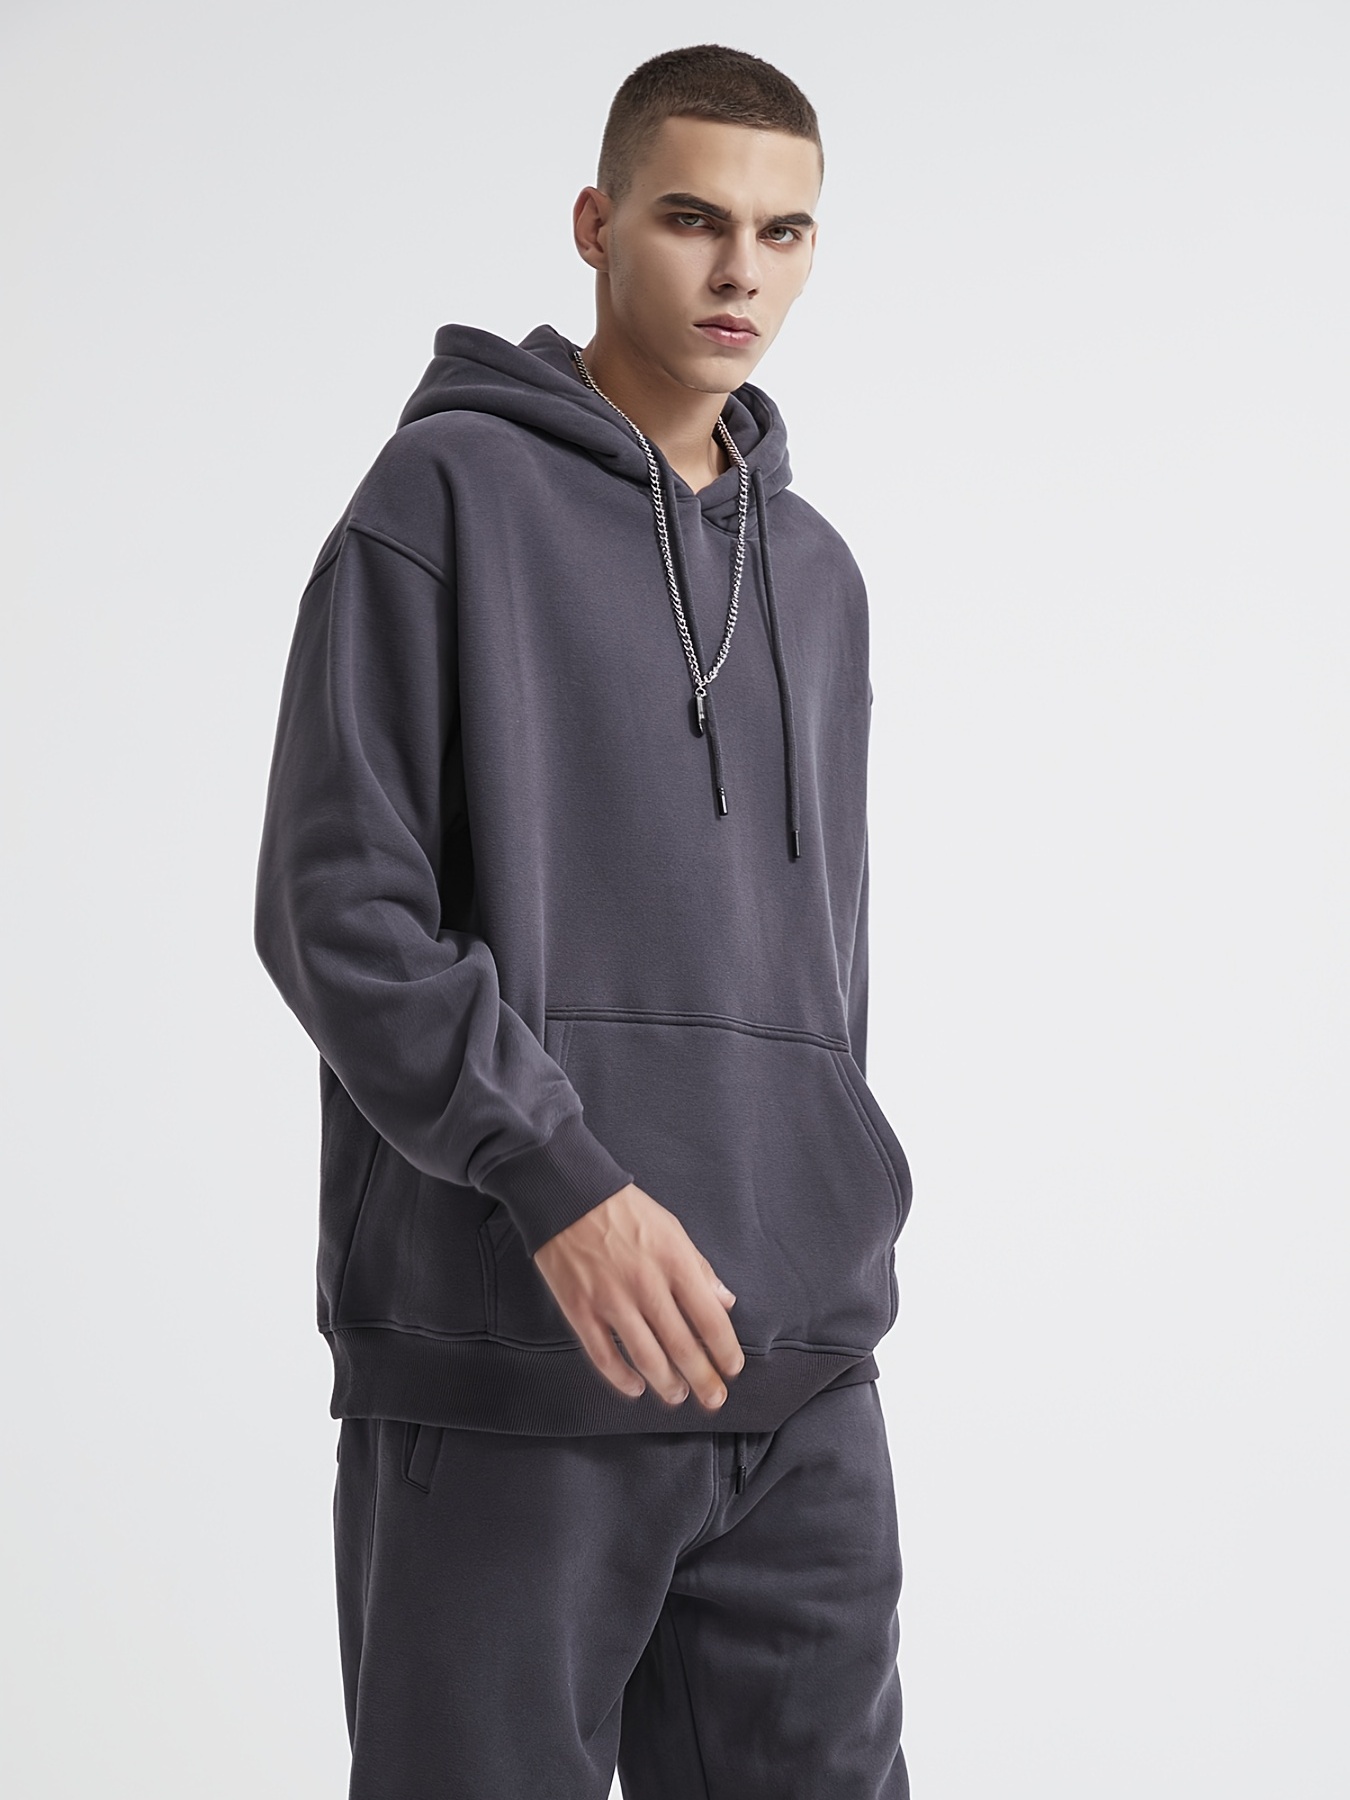 MINIPIGGY Men's Dark Gray Sports Hoodie with Pocket - Comfortable and  Stylish Plus Size Sweatshirt